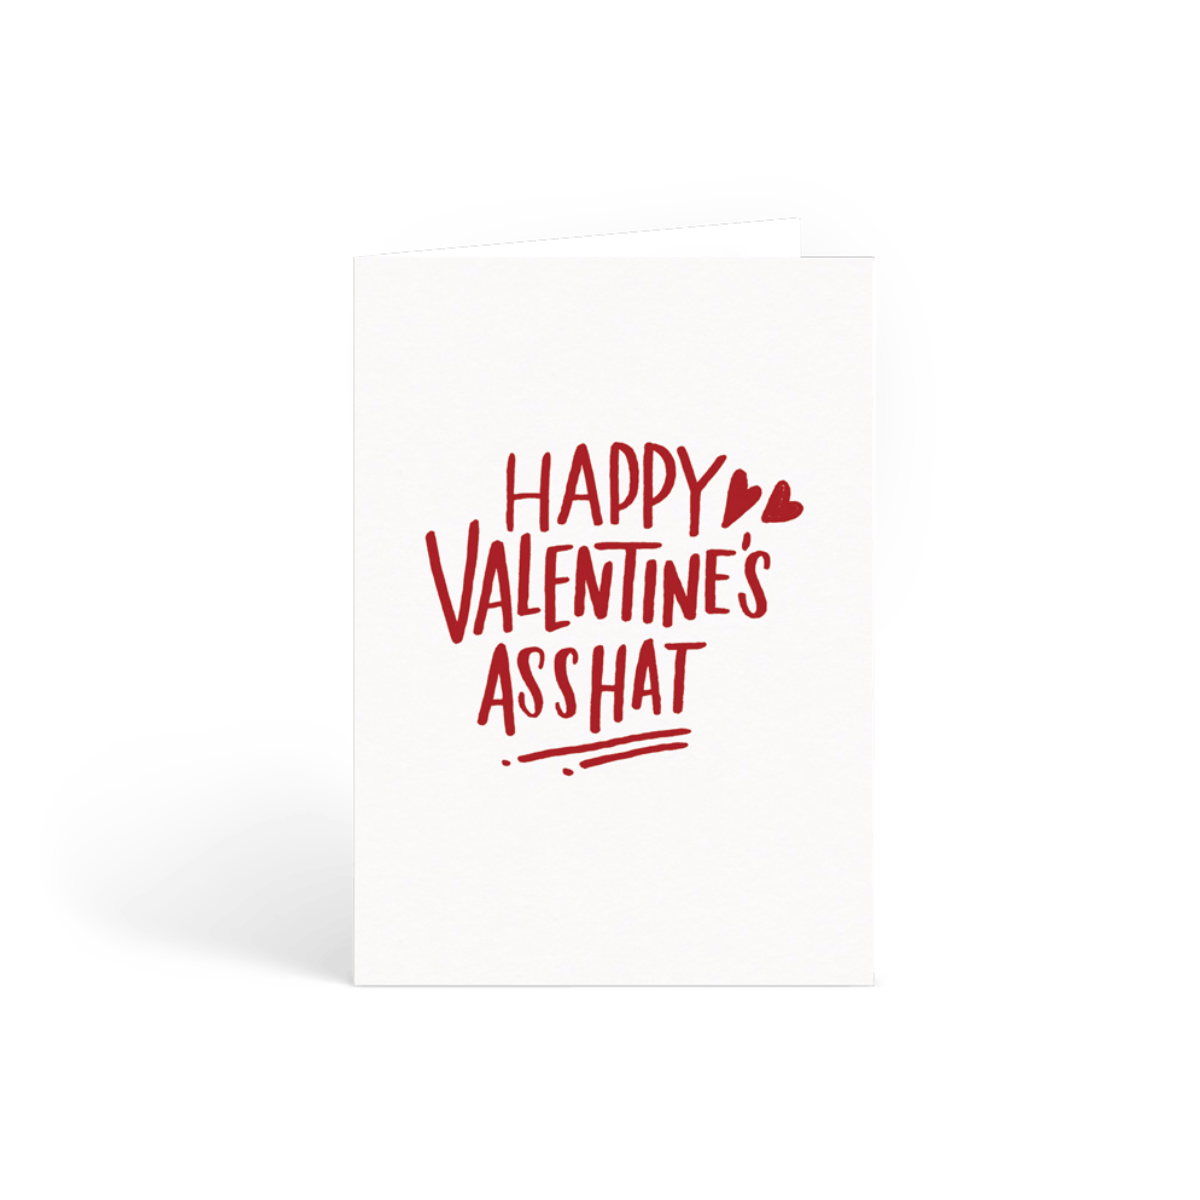 Happy Valentine's Asshat